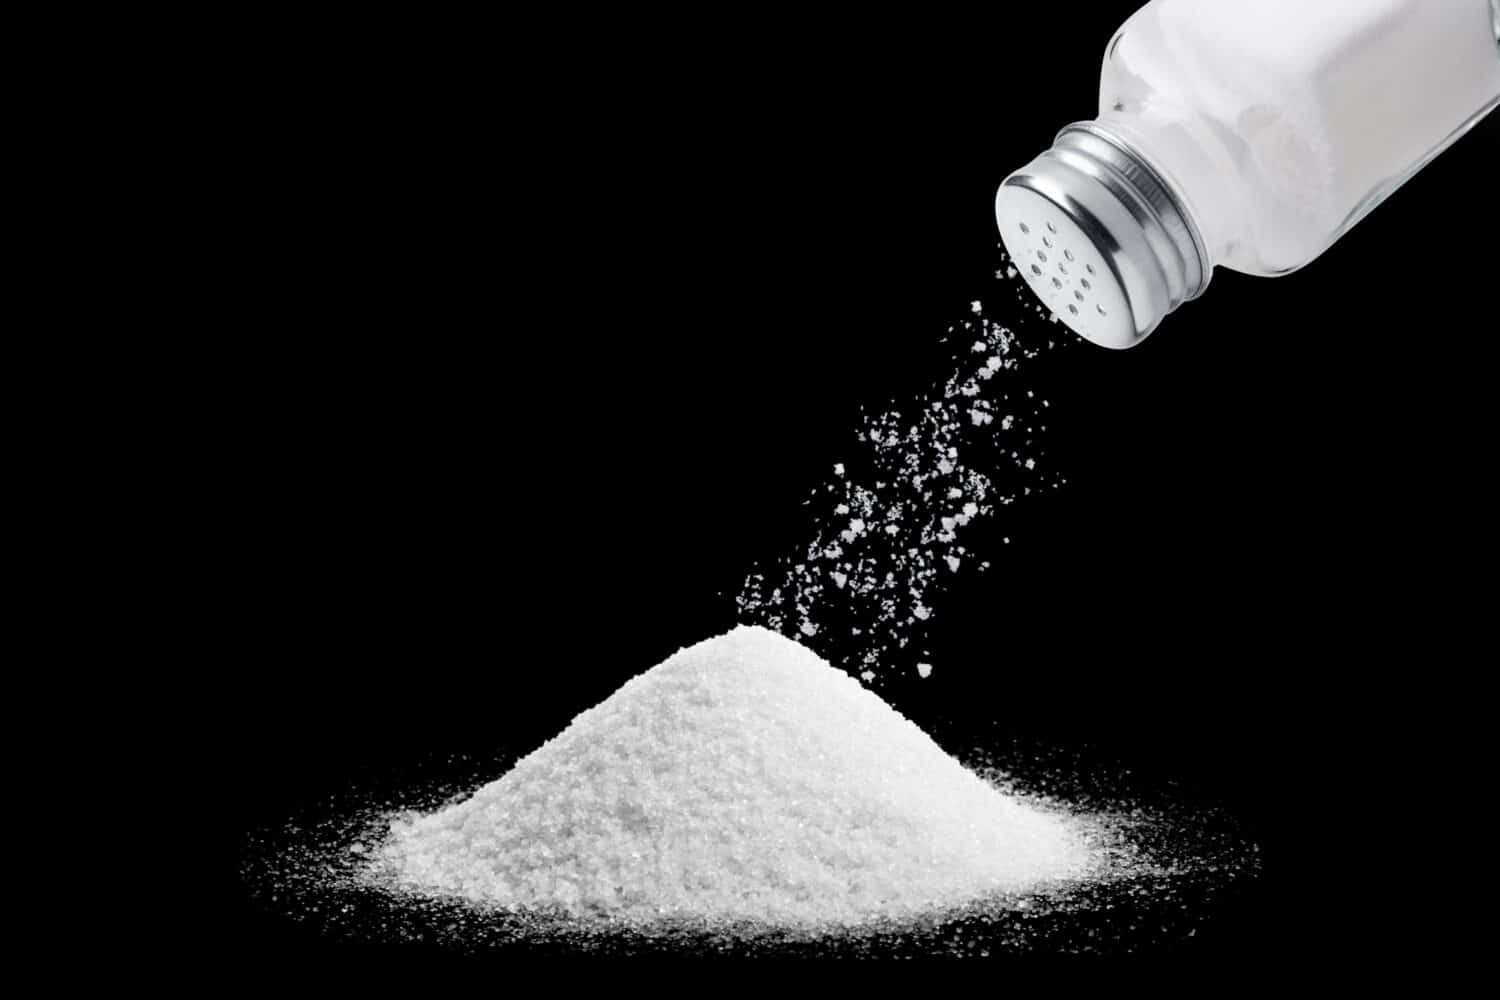 image of salt powder piled on a black background in the upper right corner a bottle of salt sprinkled with salt powder out of the bottle onto the pile of salt below. Suitable for use in food media.